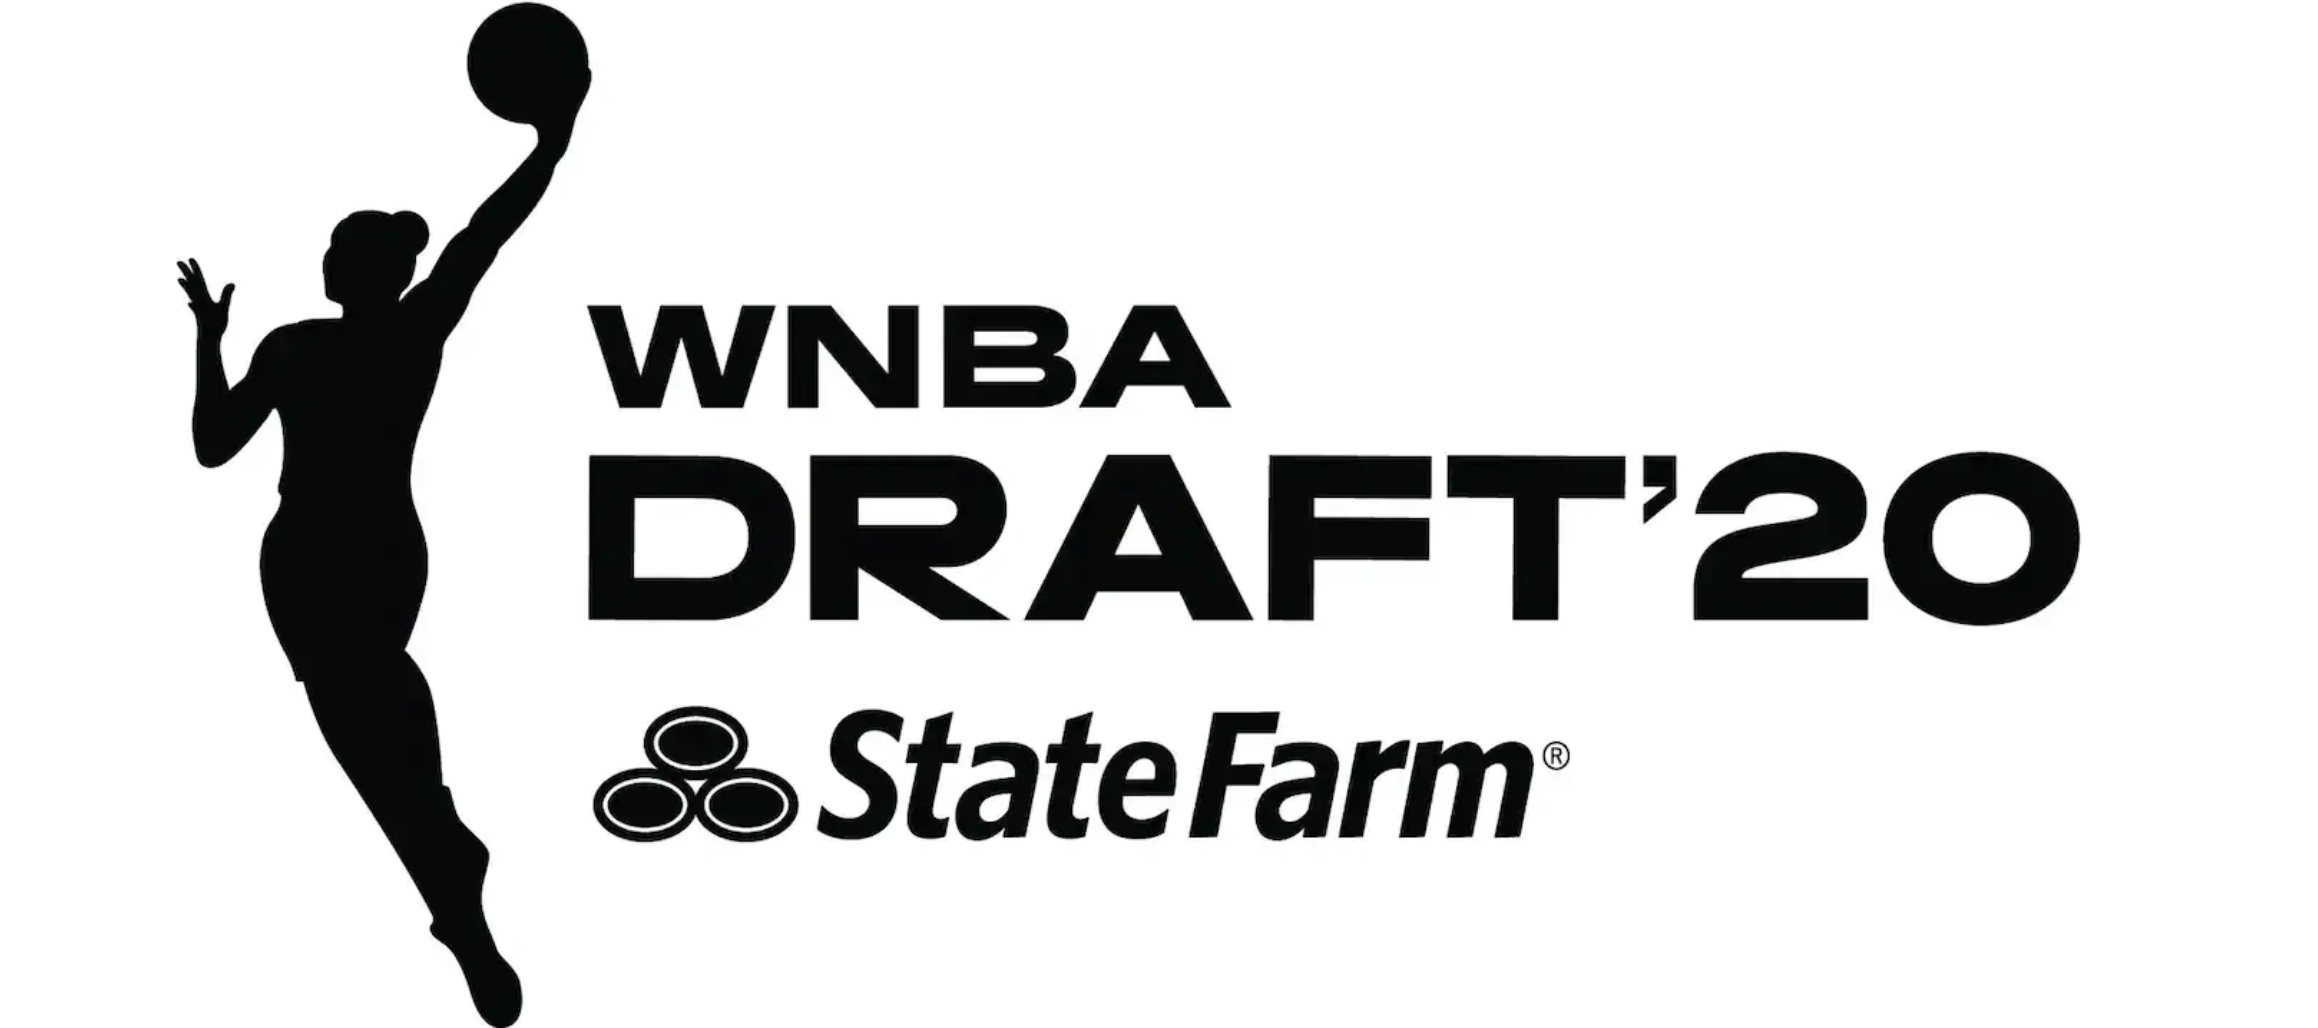 2020 WNBA Draft Results